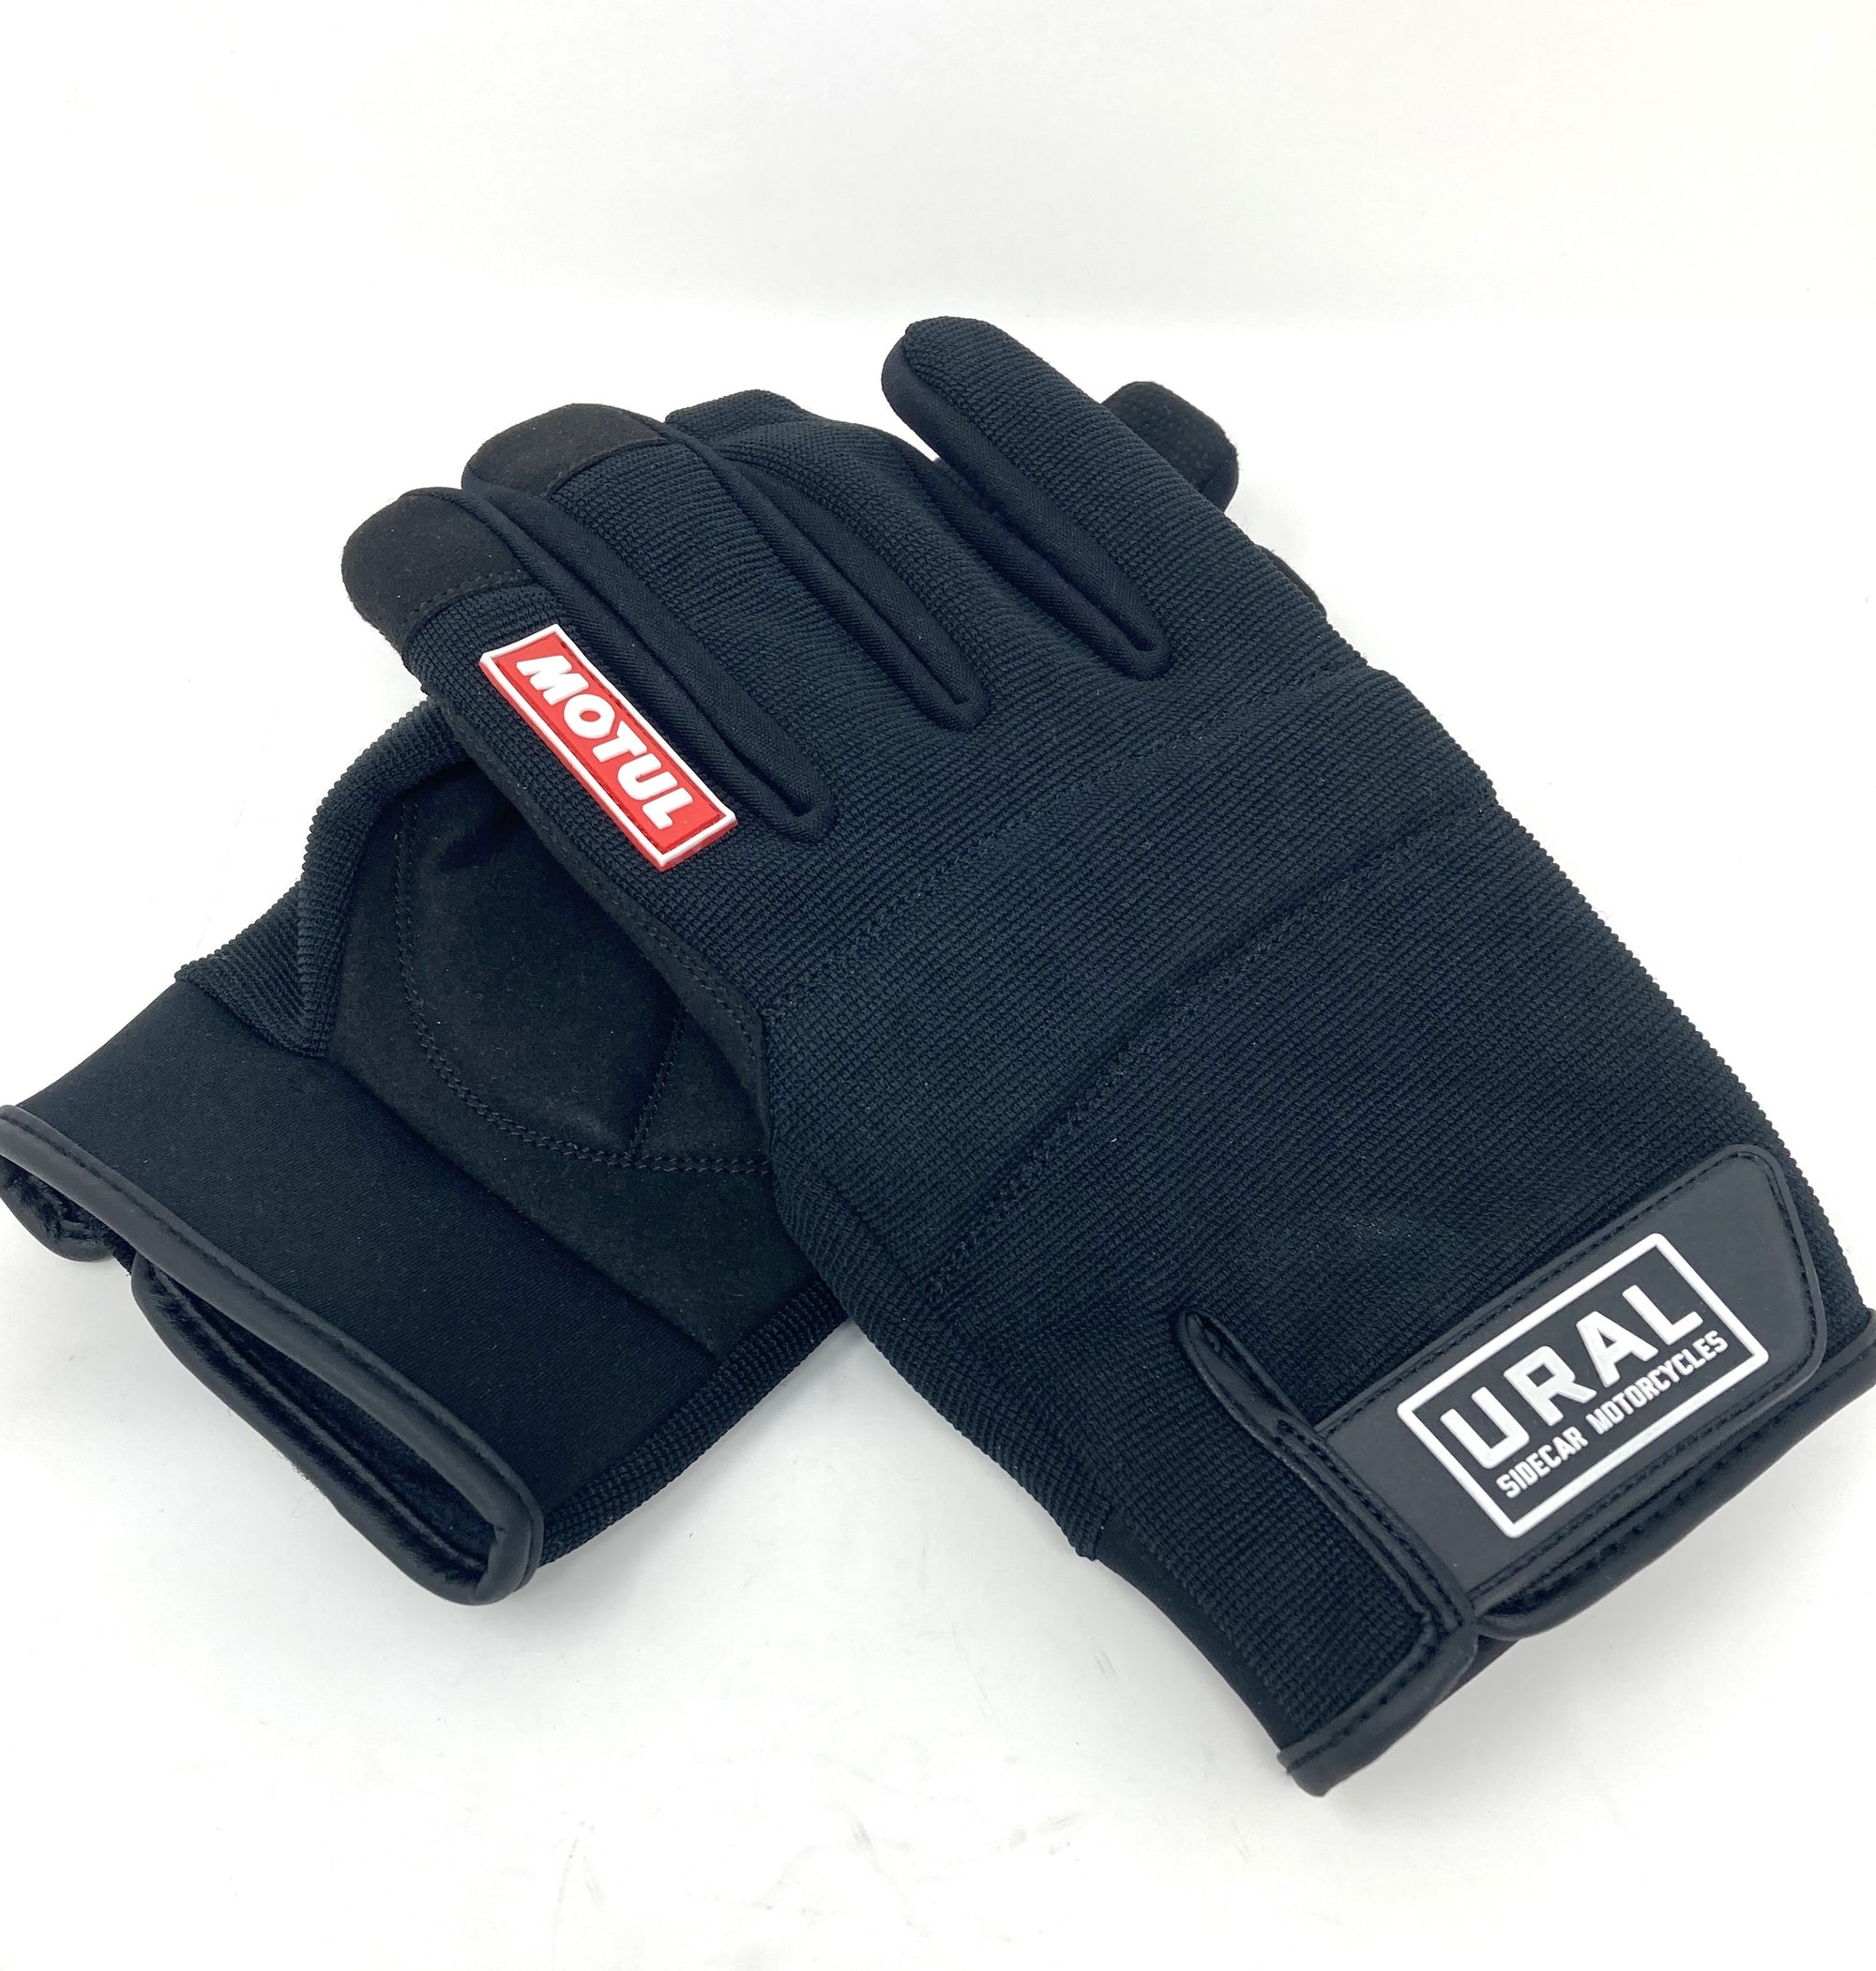 Ural Mechanic Glove